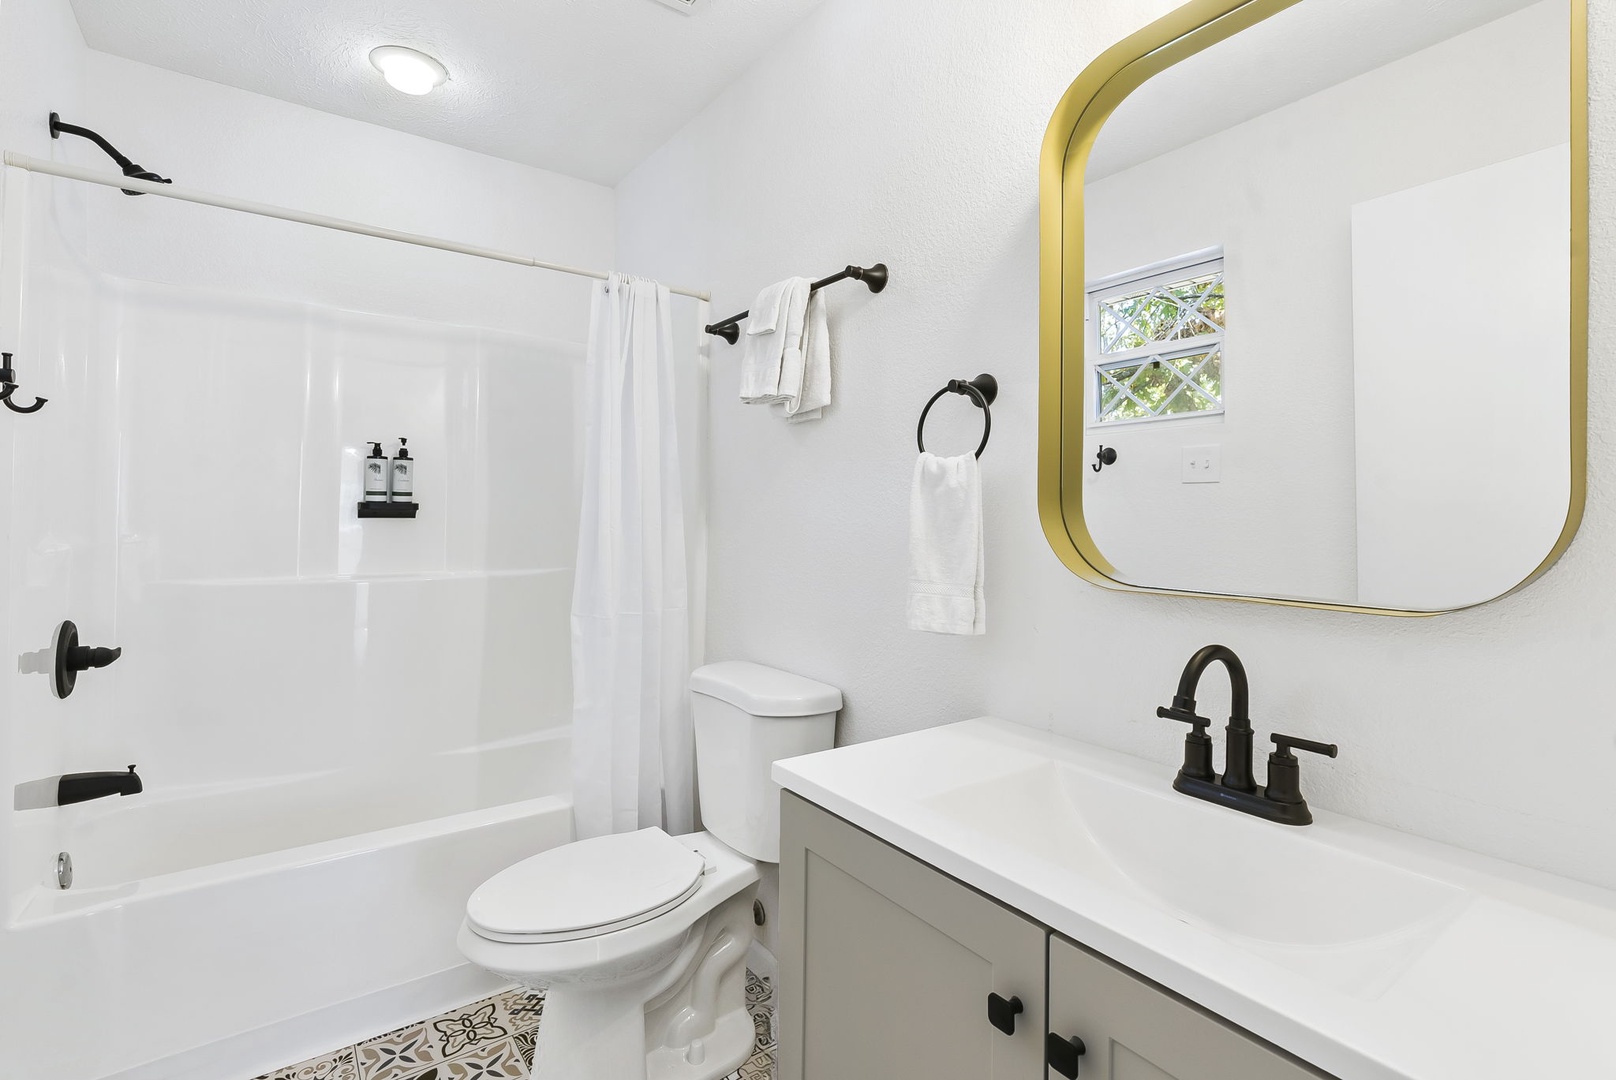 The 2nd floor king en suite offers a single vanity & shower/tub combo